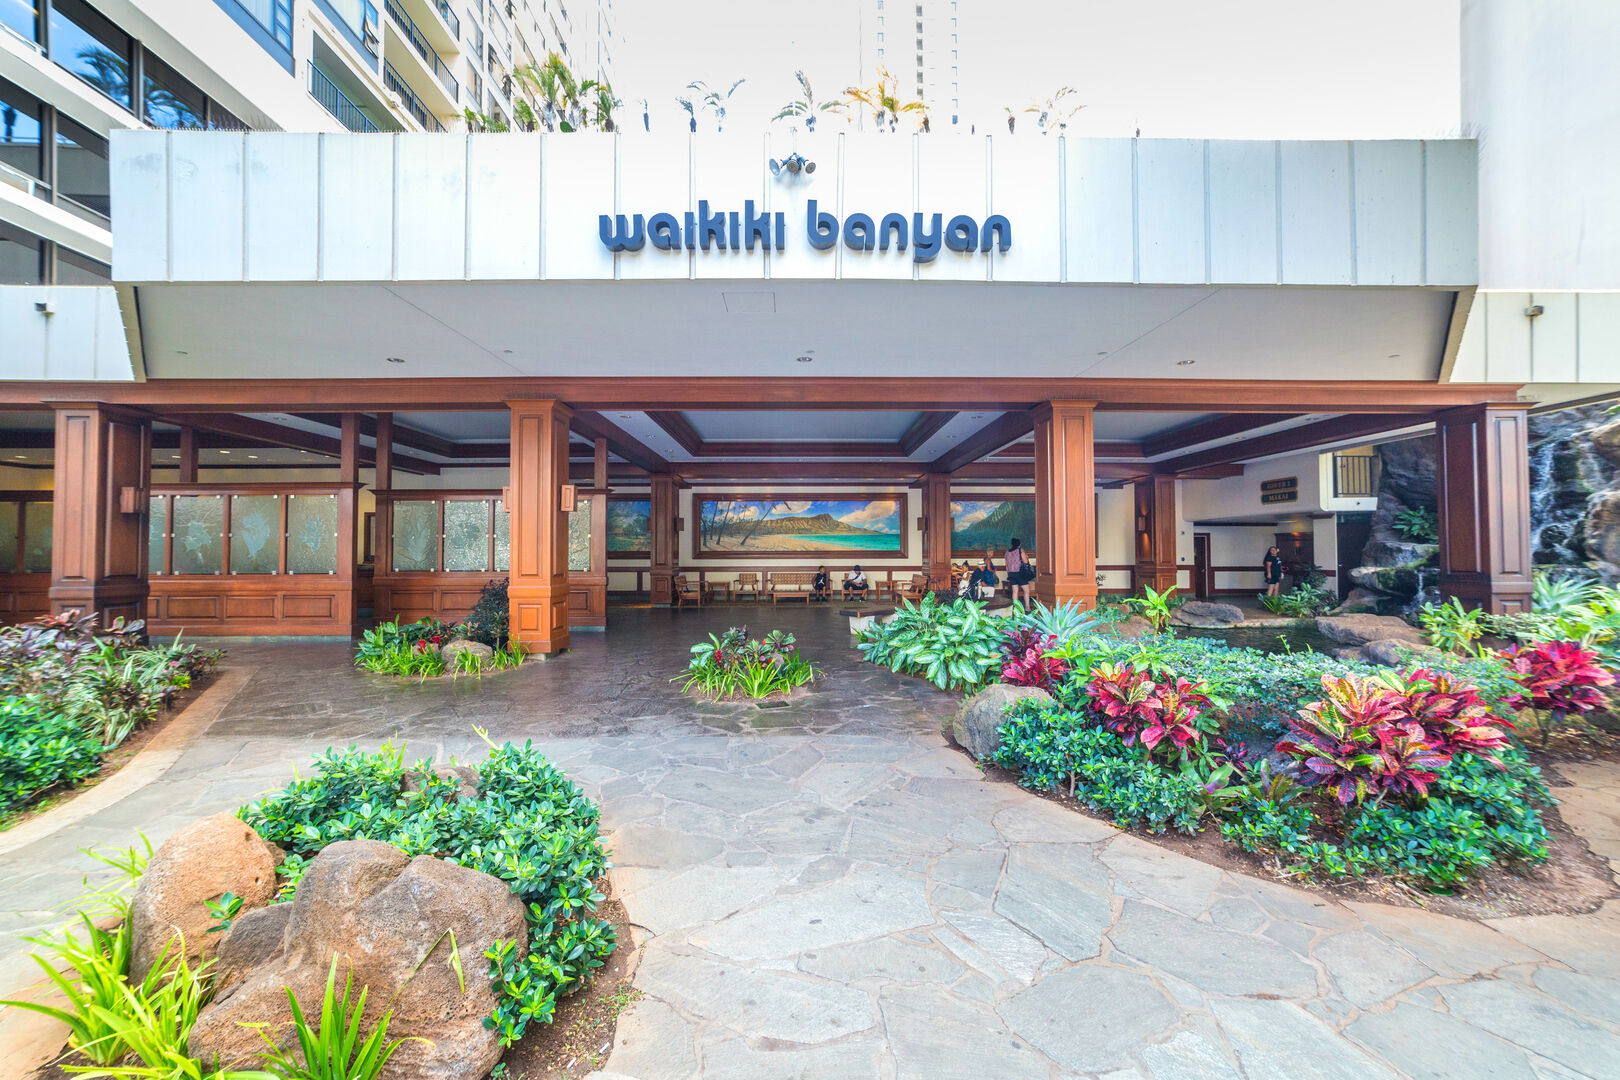 Waikiki Banyan entrance with open-air lobby